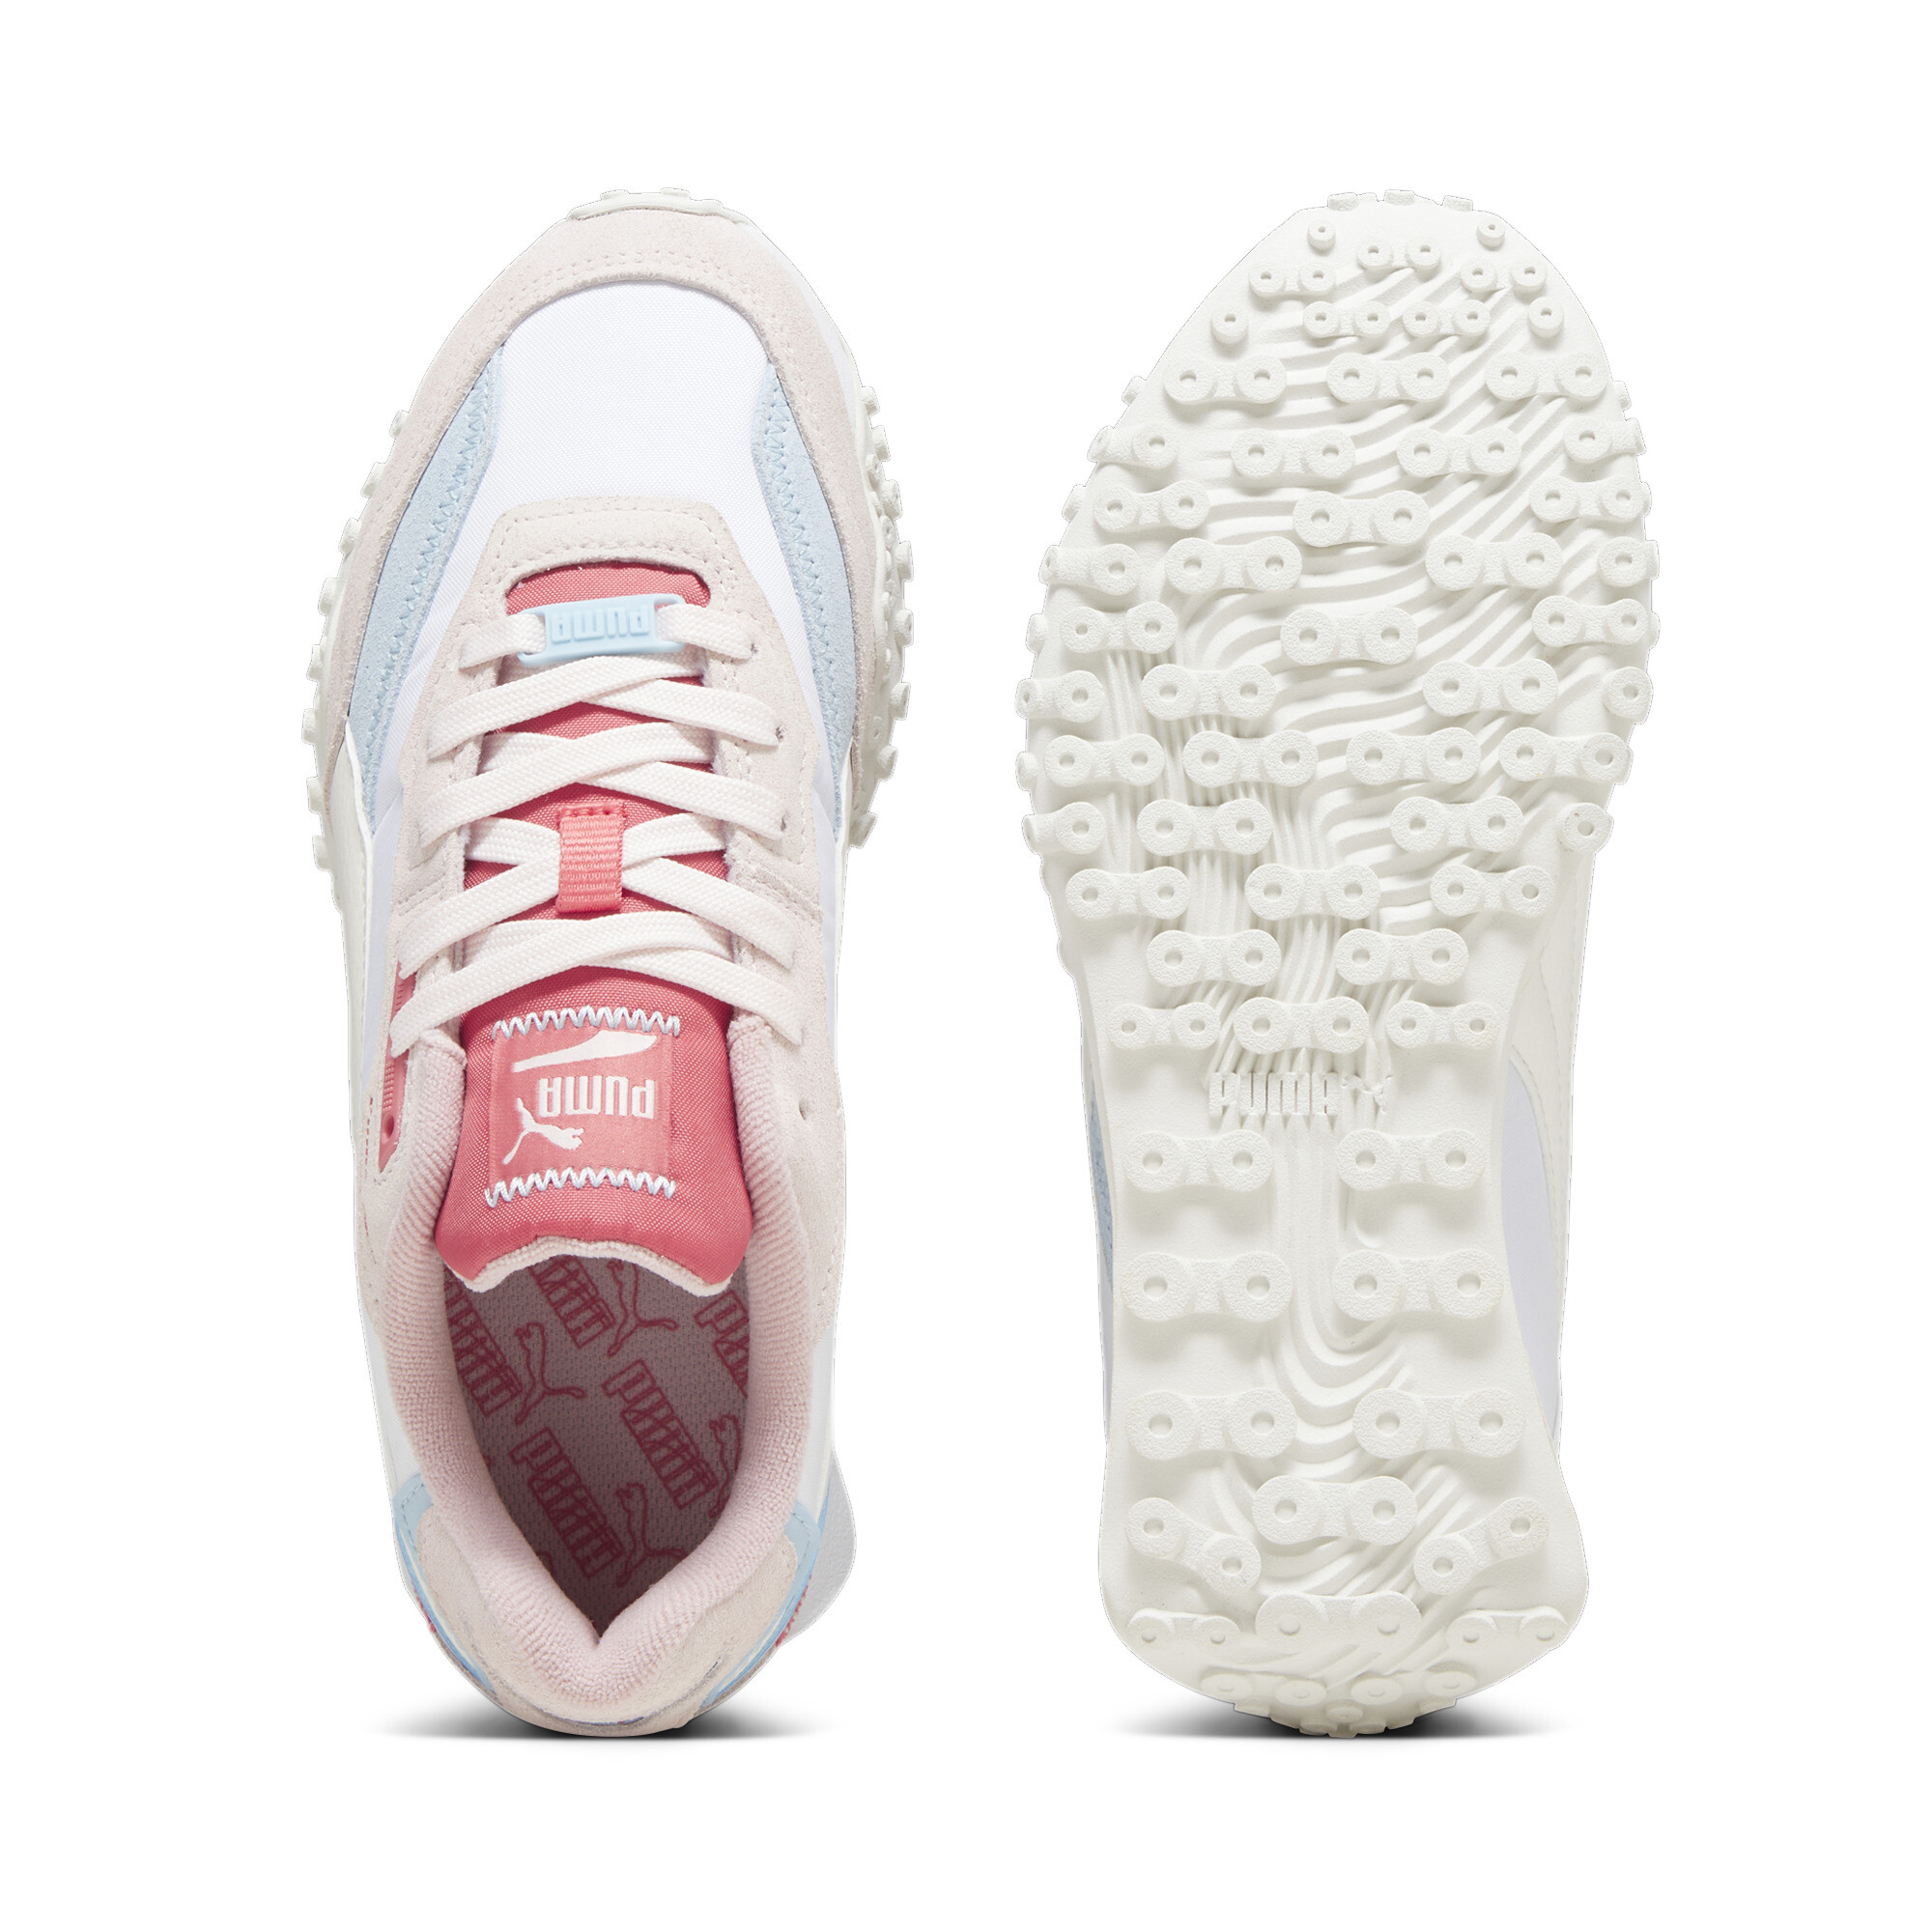 Men's PUMA Blktop Rider Sneakers In White/Pink, Size EU 37.5